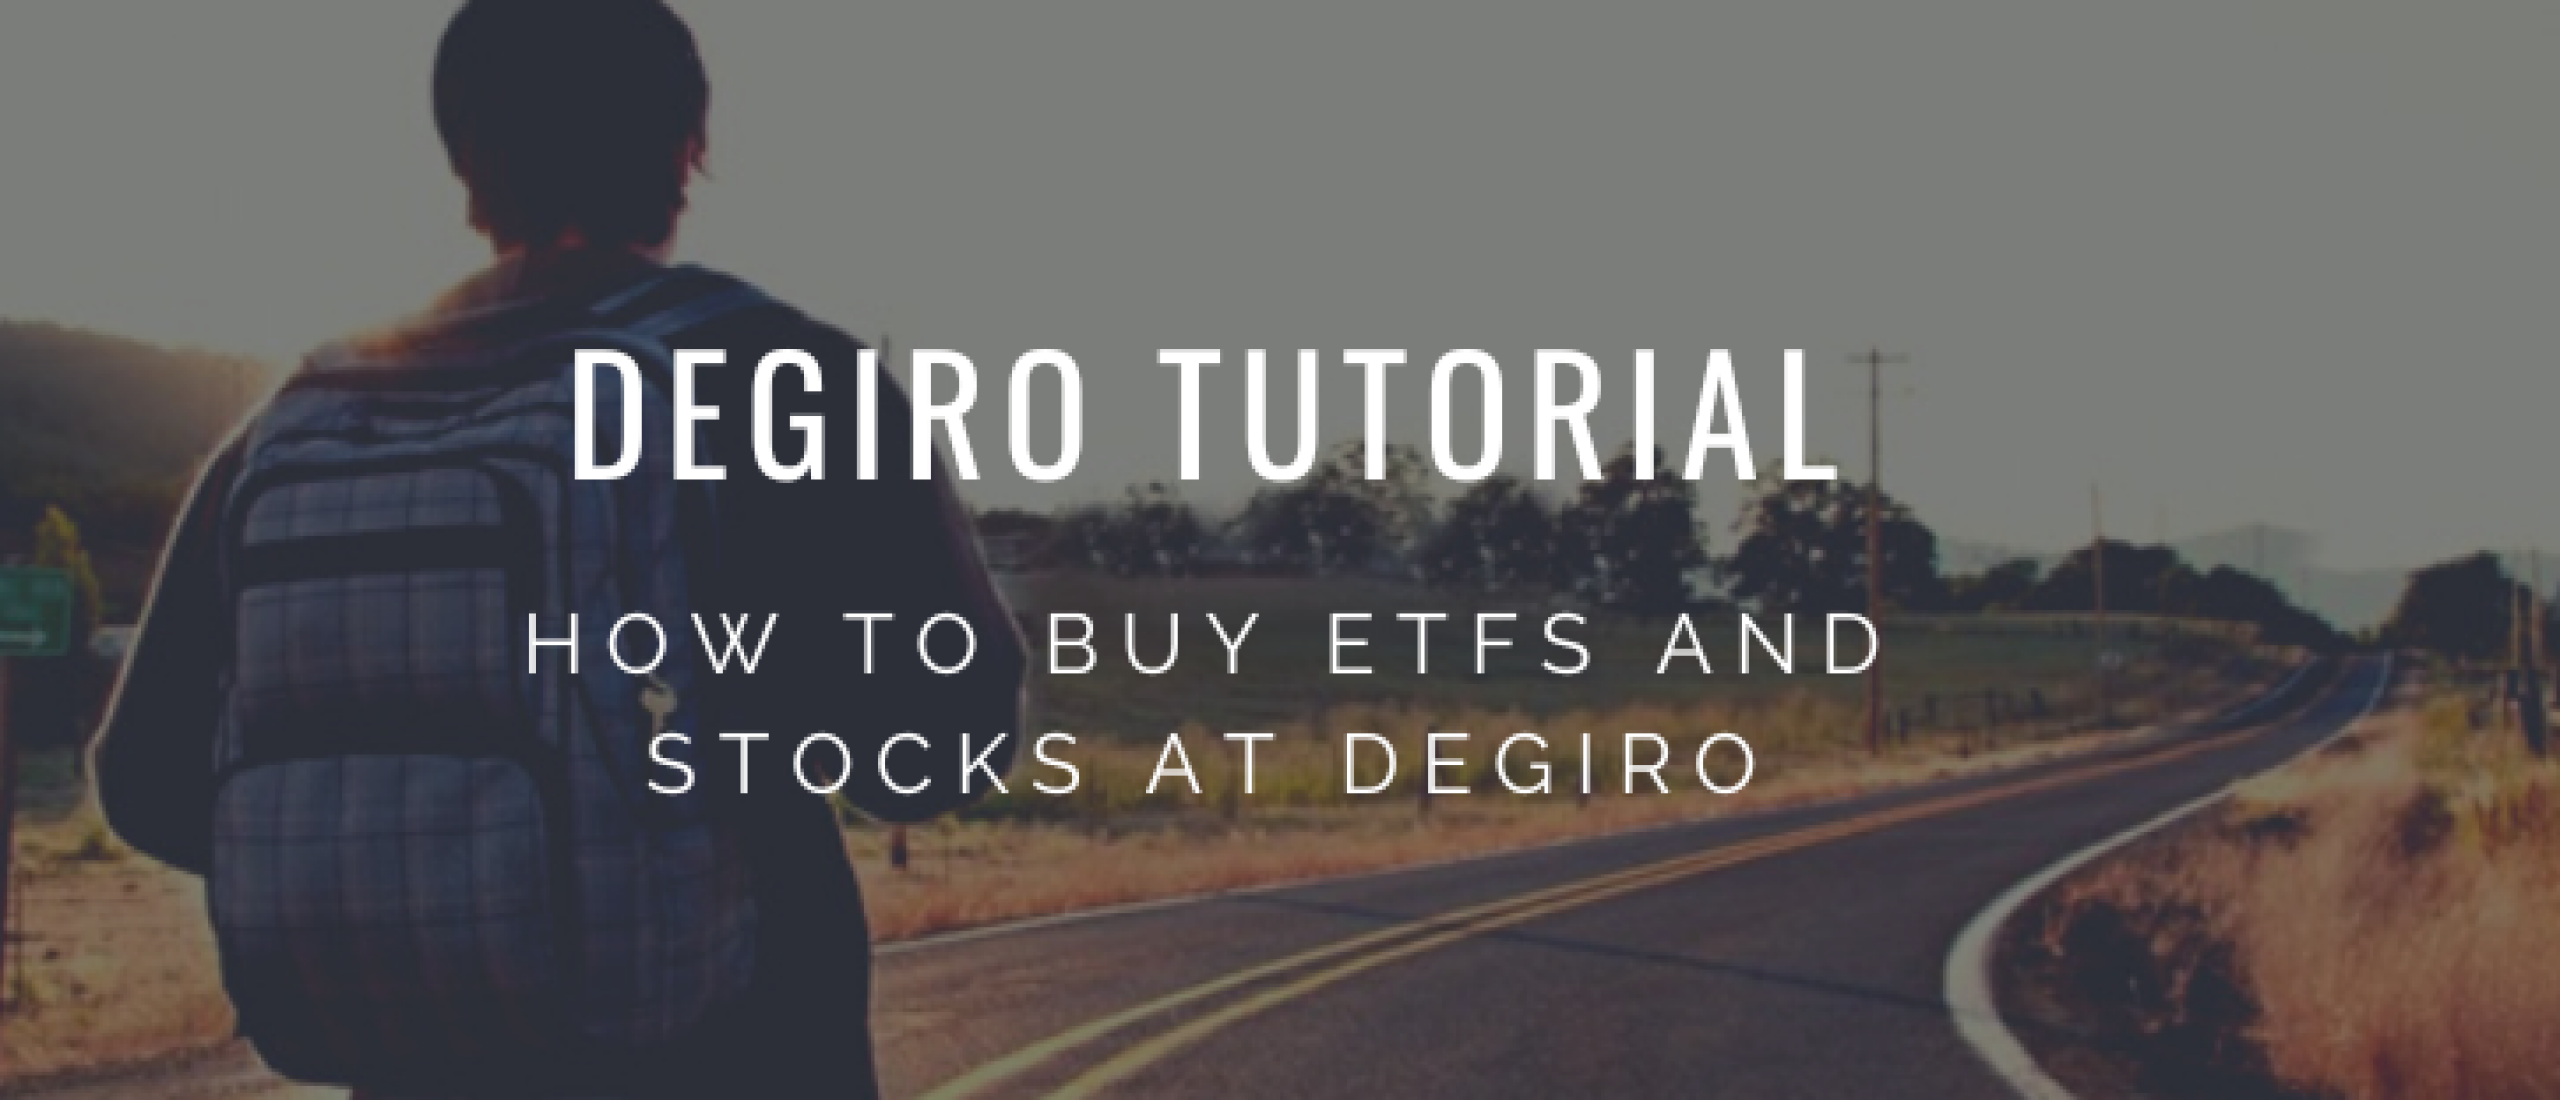 DEGIRO Tutorial How DEGIRO Works: ETF, Stocks, Dividend Explanation